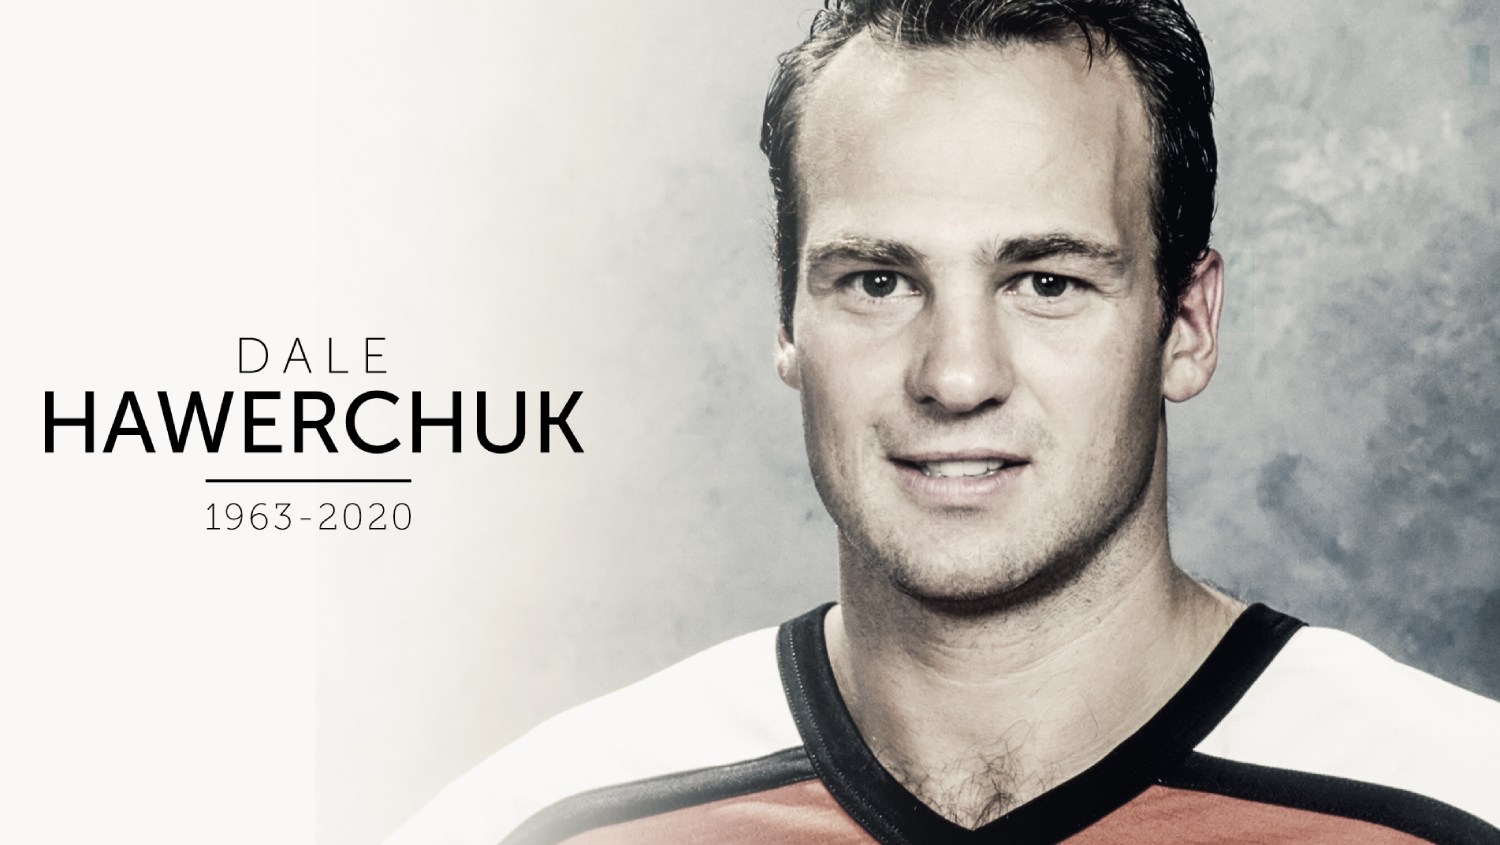 Greatest Hockey Legends.com: Dale Hawerchuk Dies At 57